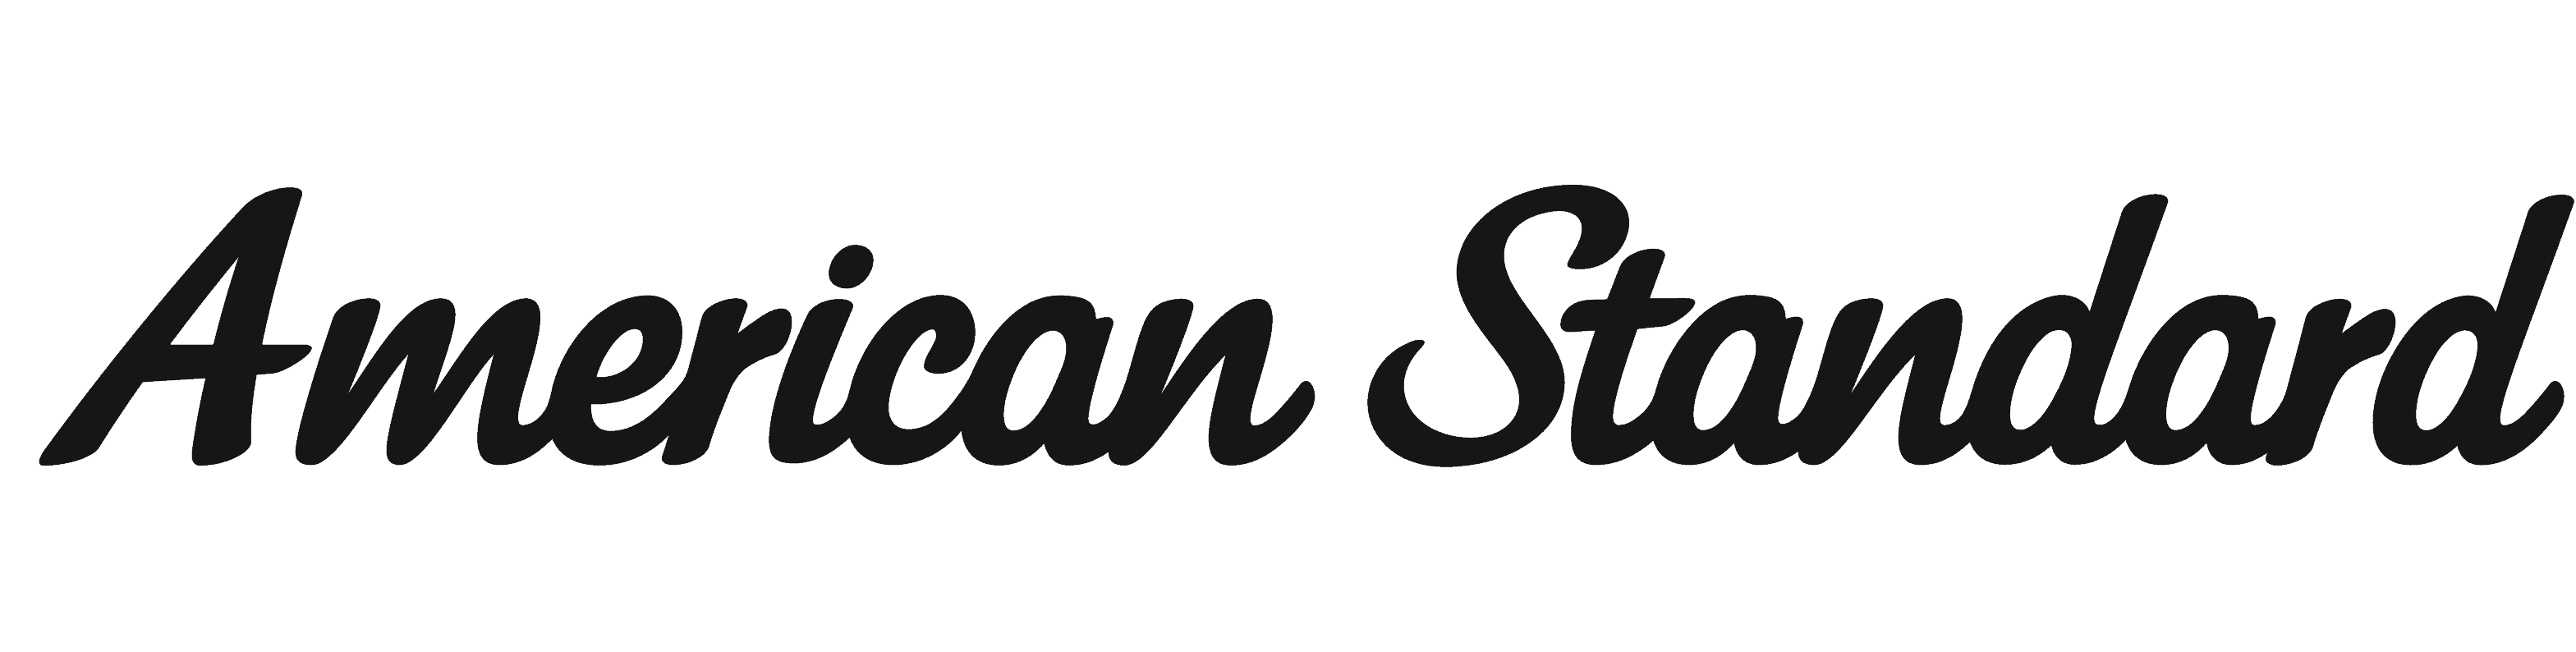 American Standard walk-in tubs logo